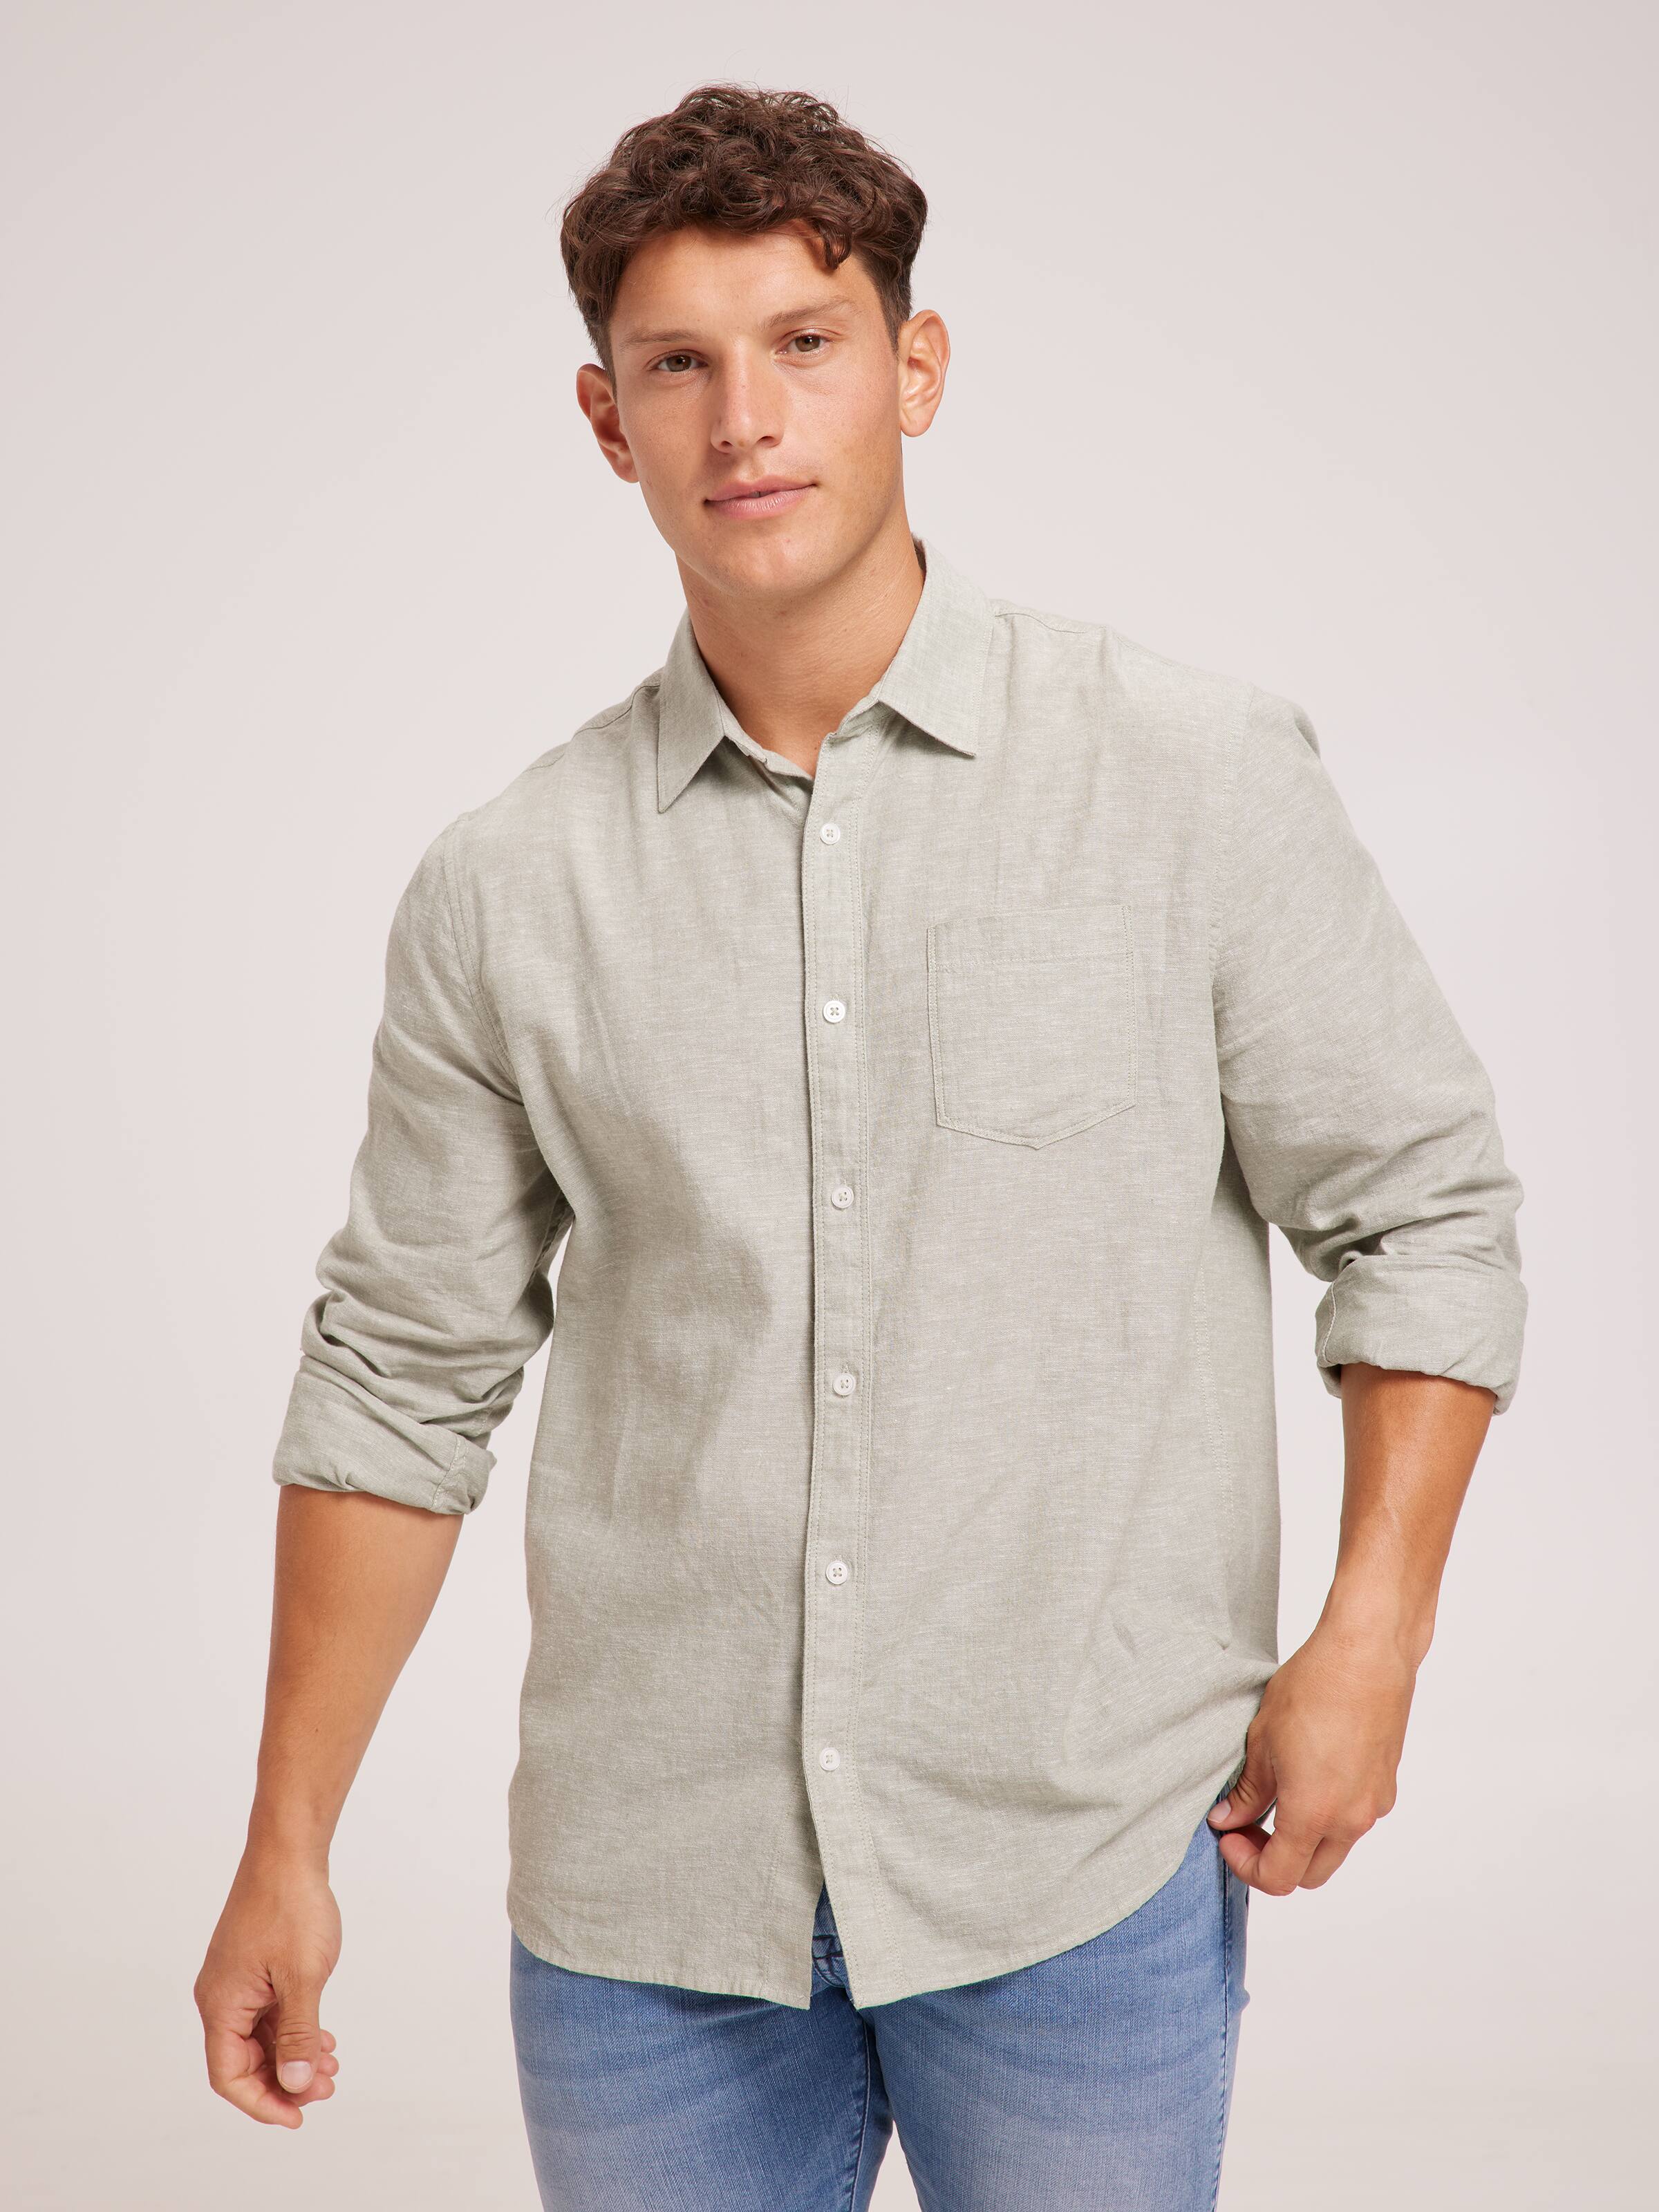 Buy Light Grey Linen Blend Shirt for Men Online in India -Beyoung